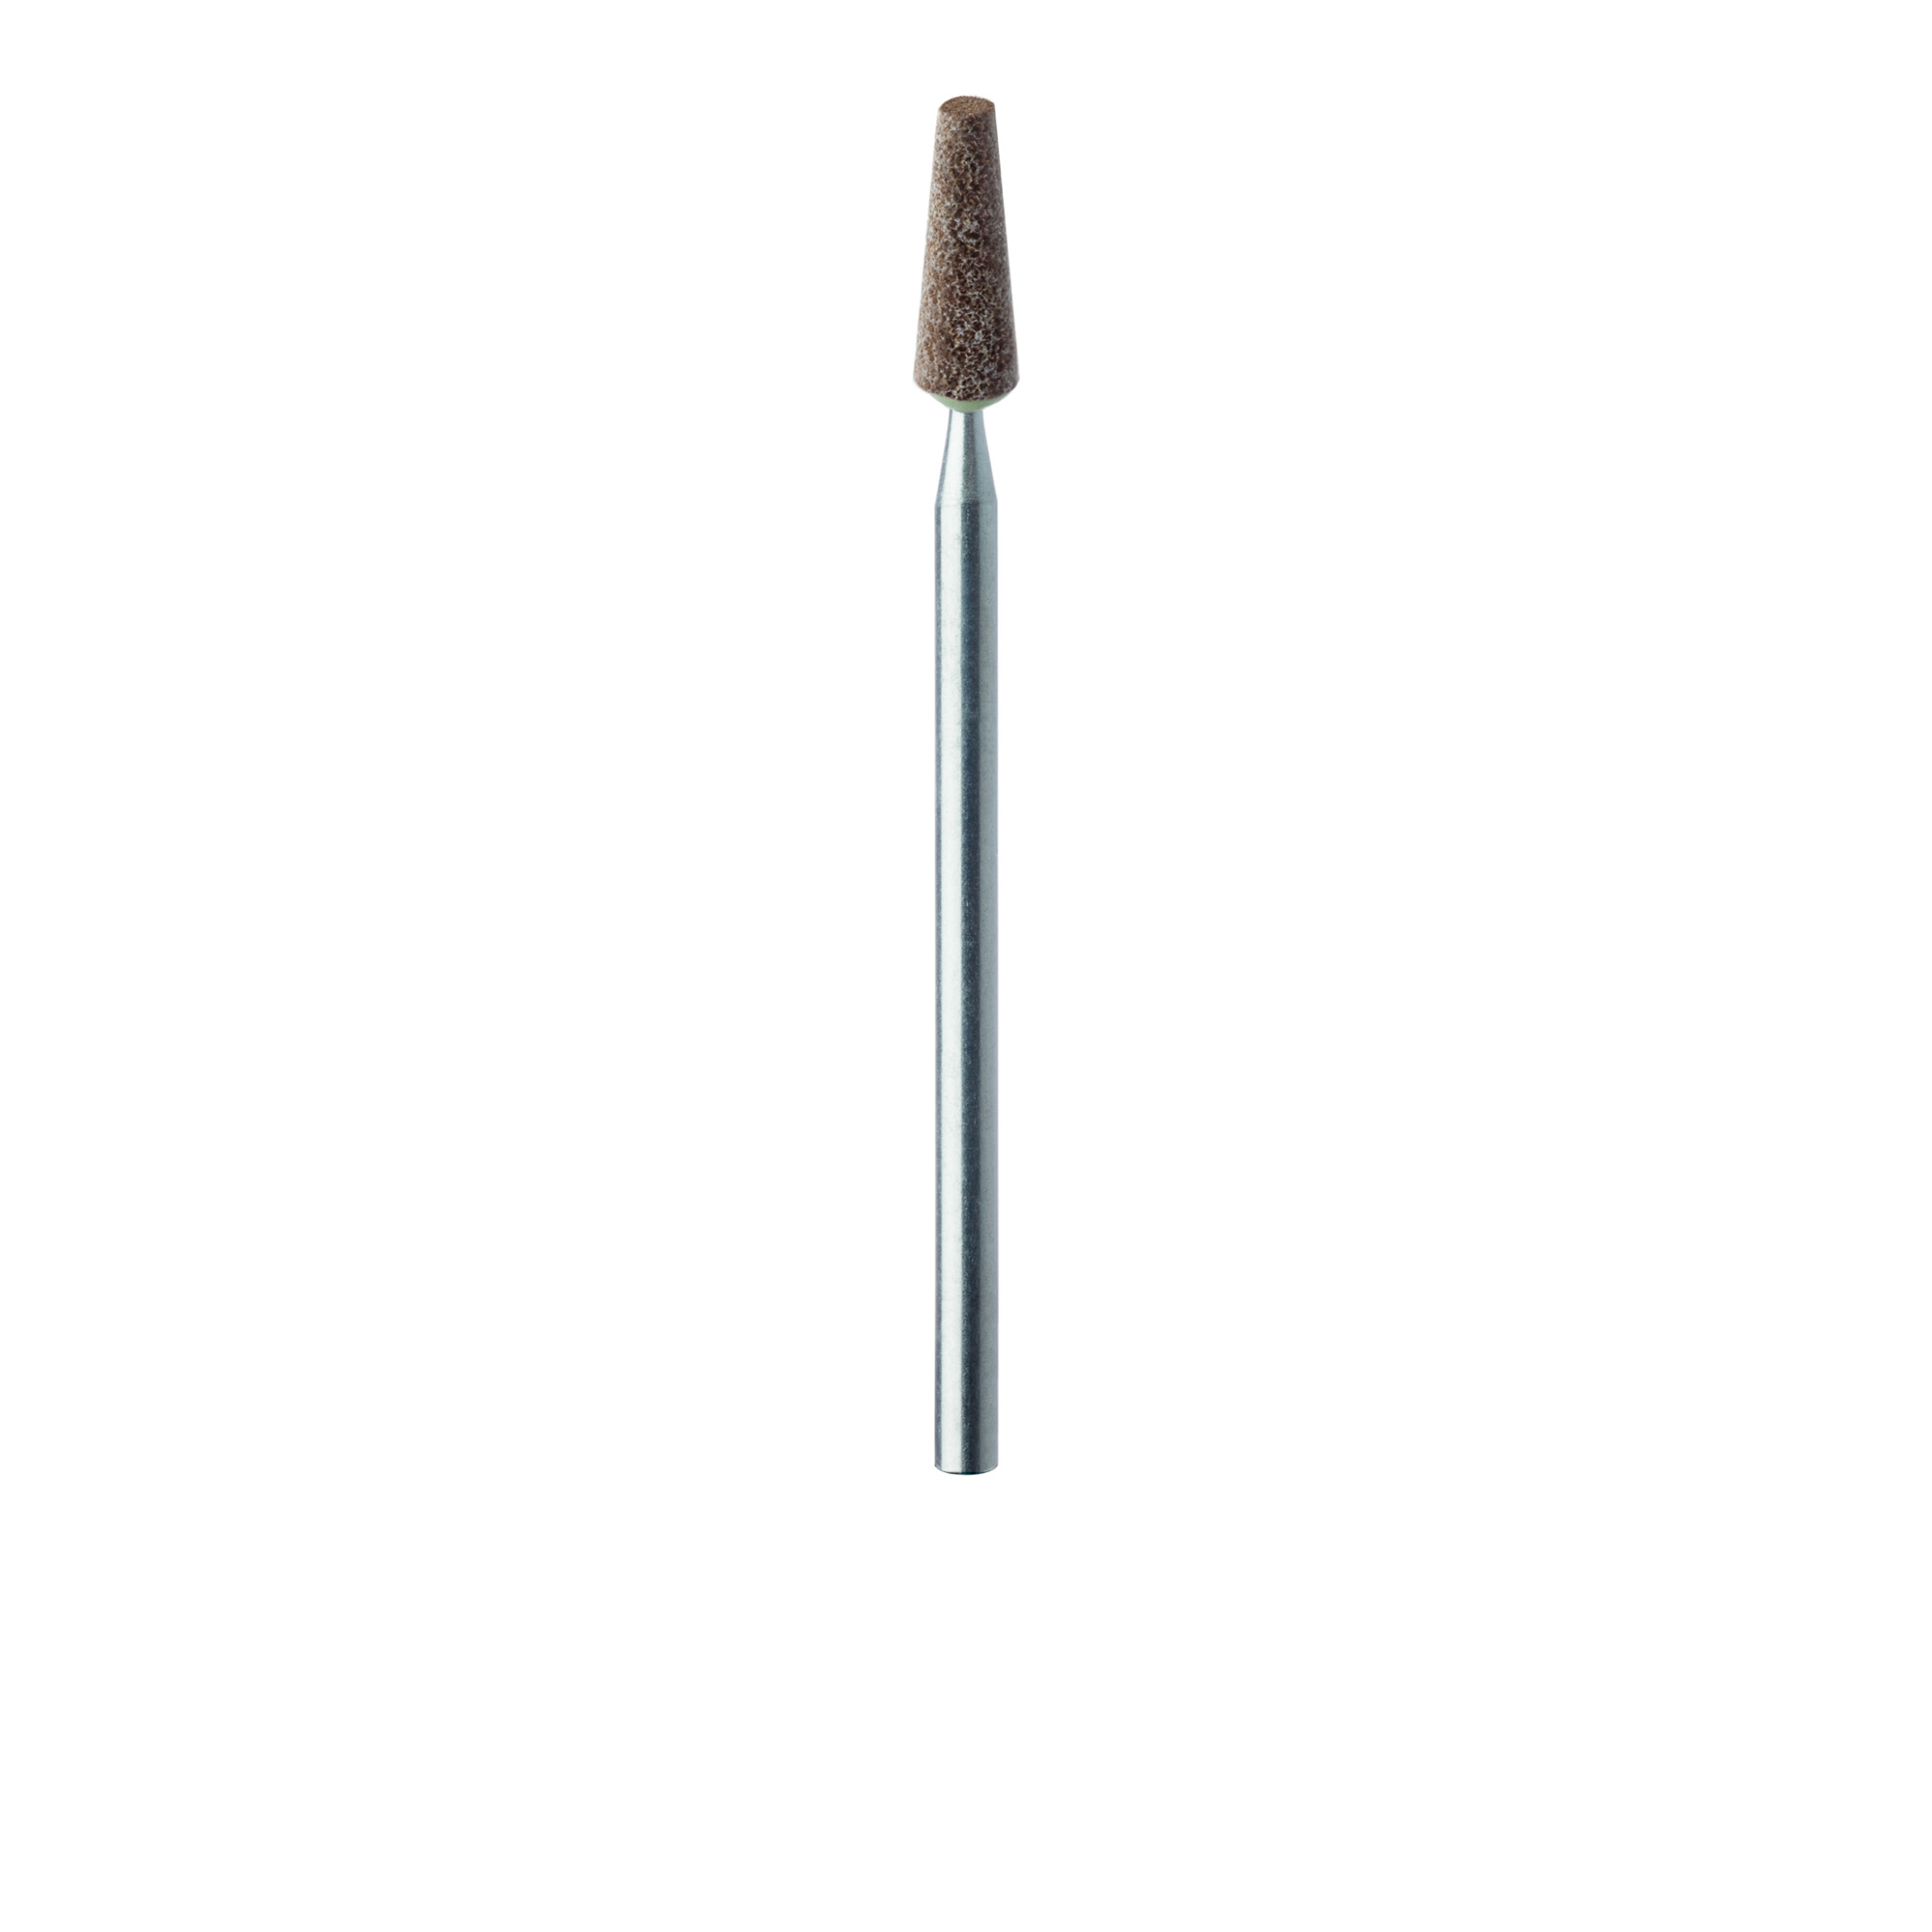 733-035-HP-BRN Abrasive, Brown, Hard, Flat End Taper 3.5mm HP